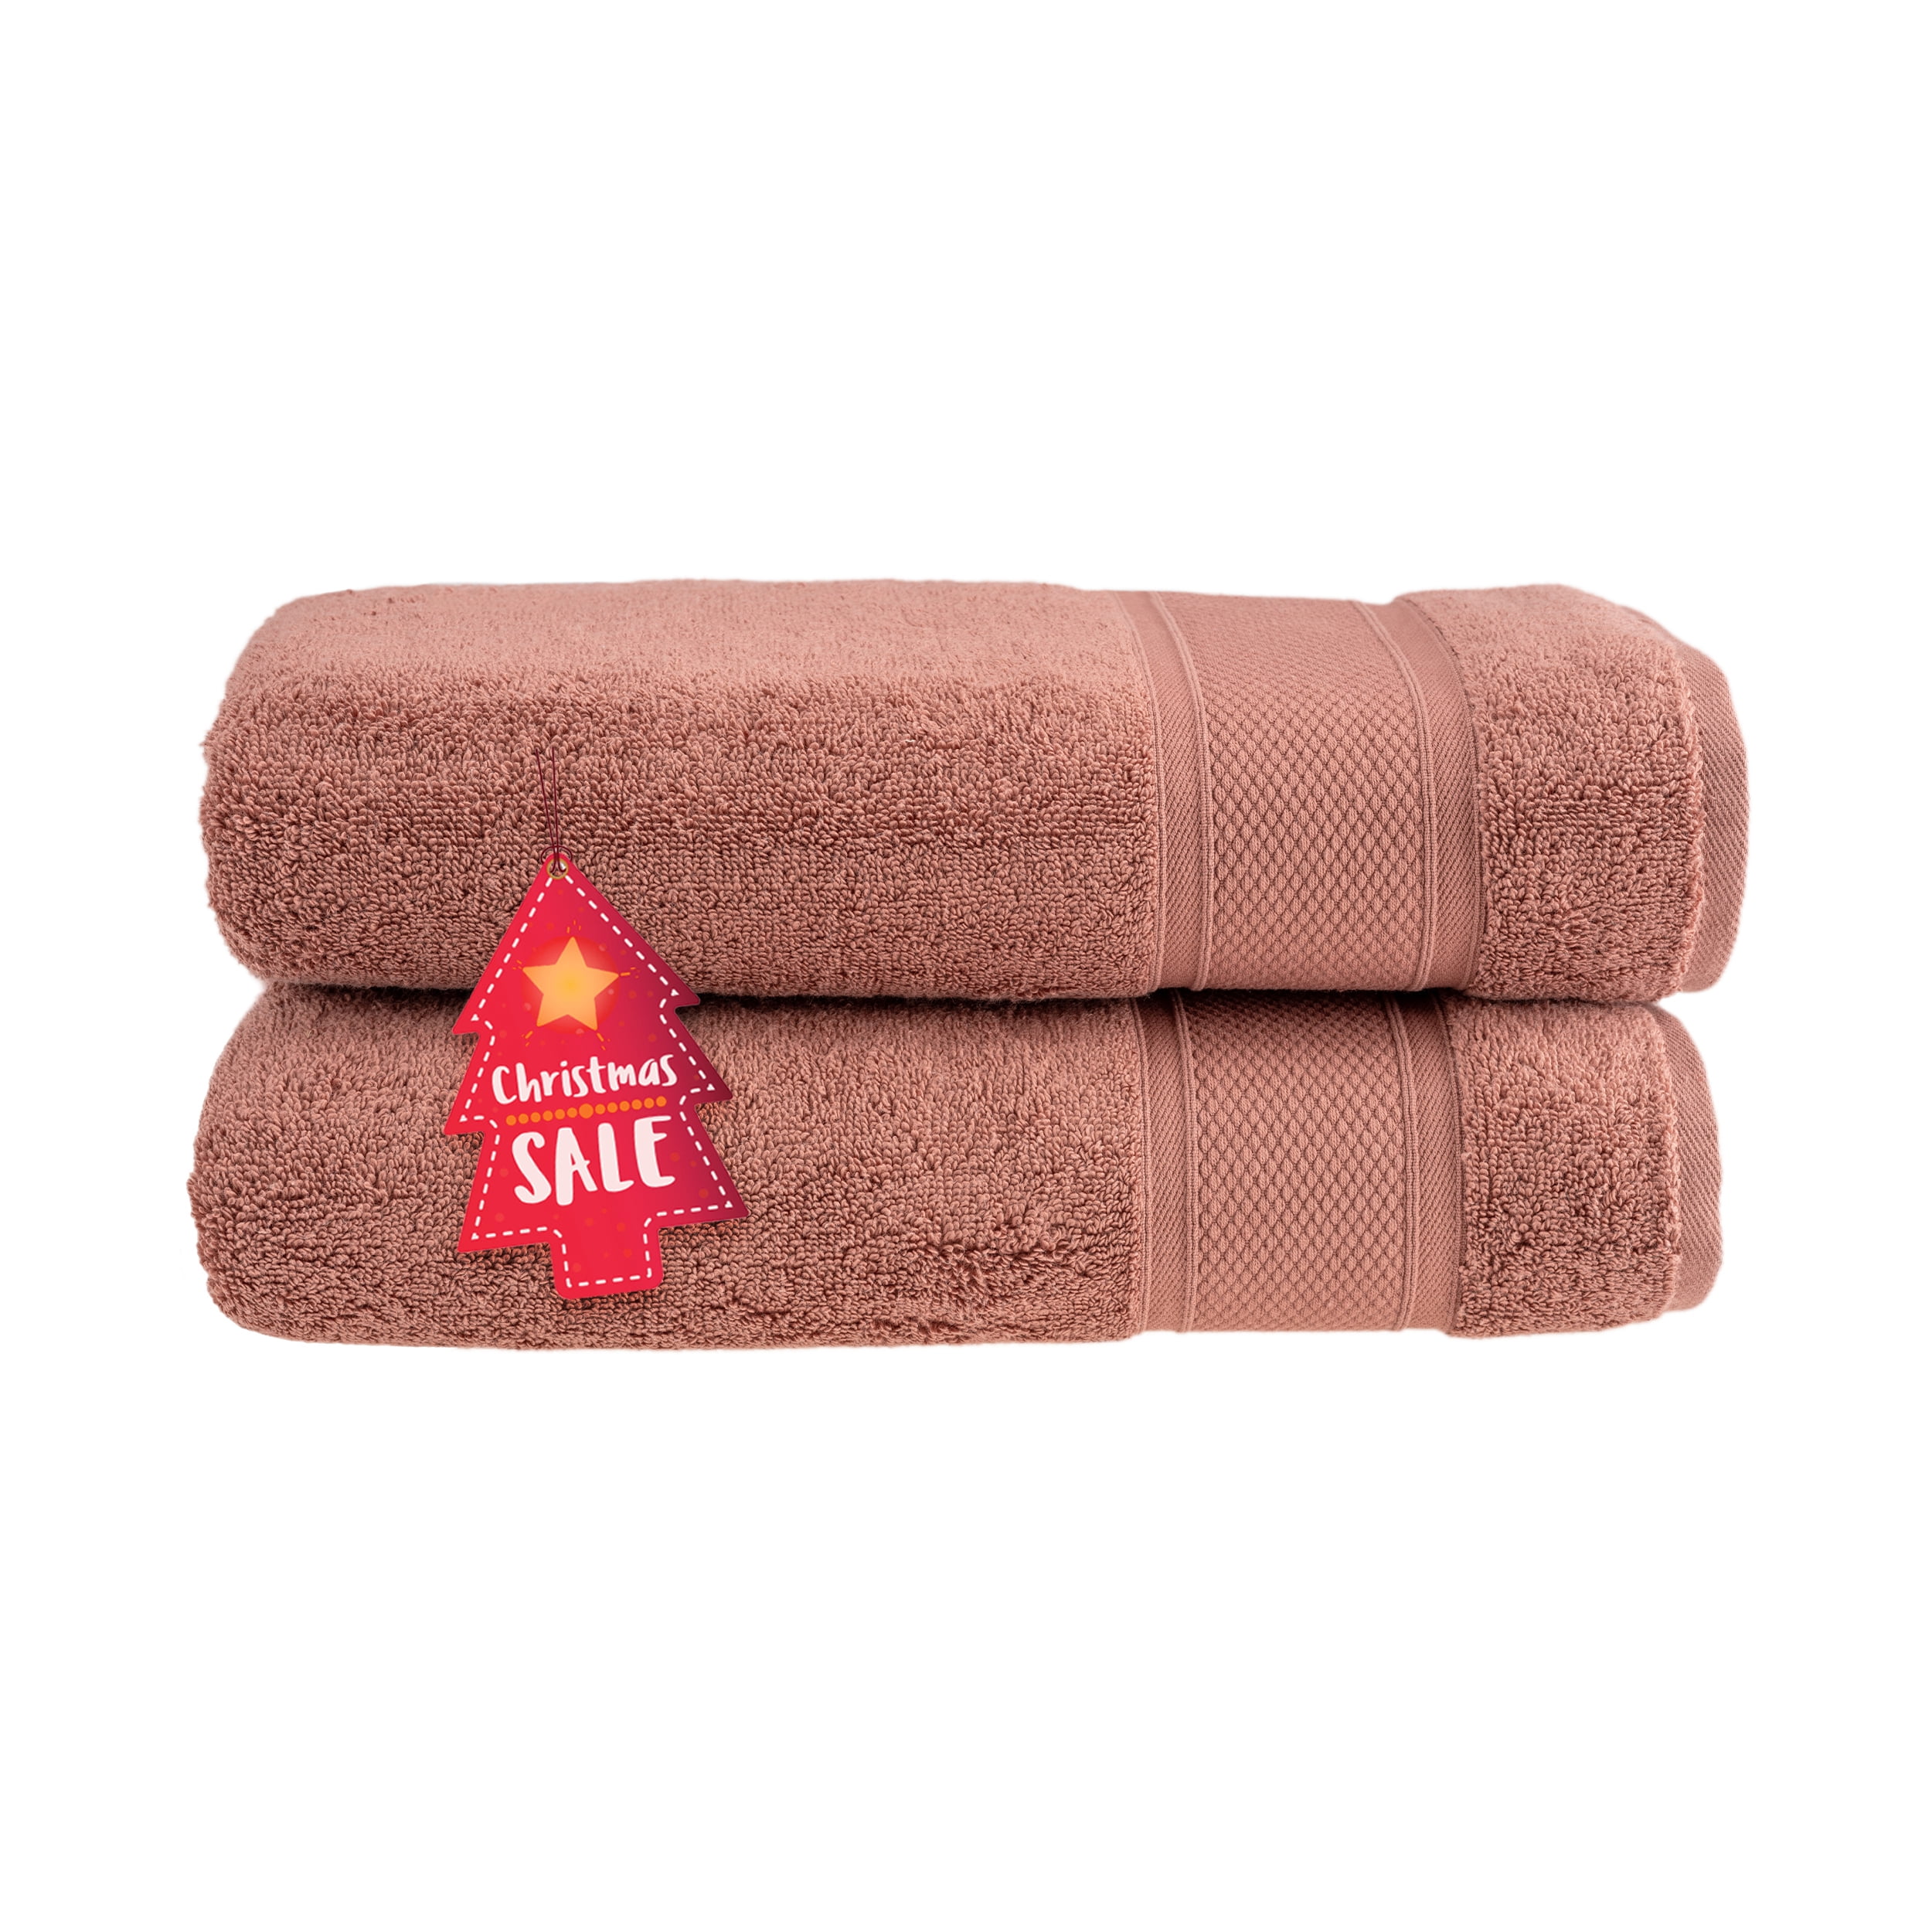 HALLEY Decorative Bath Towels Set, 4 Piece - Turkish Towel Set